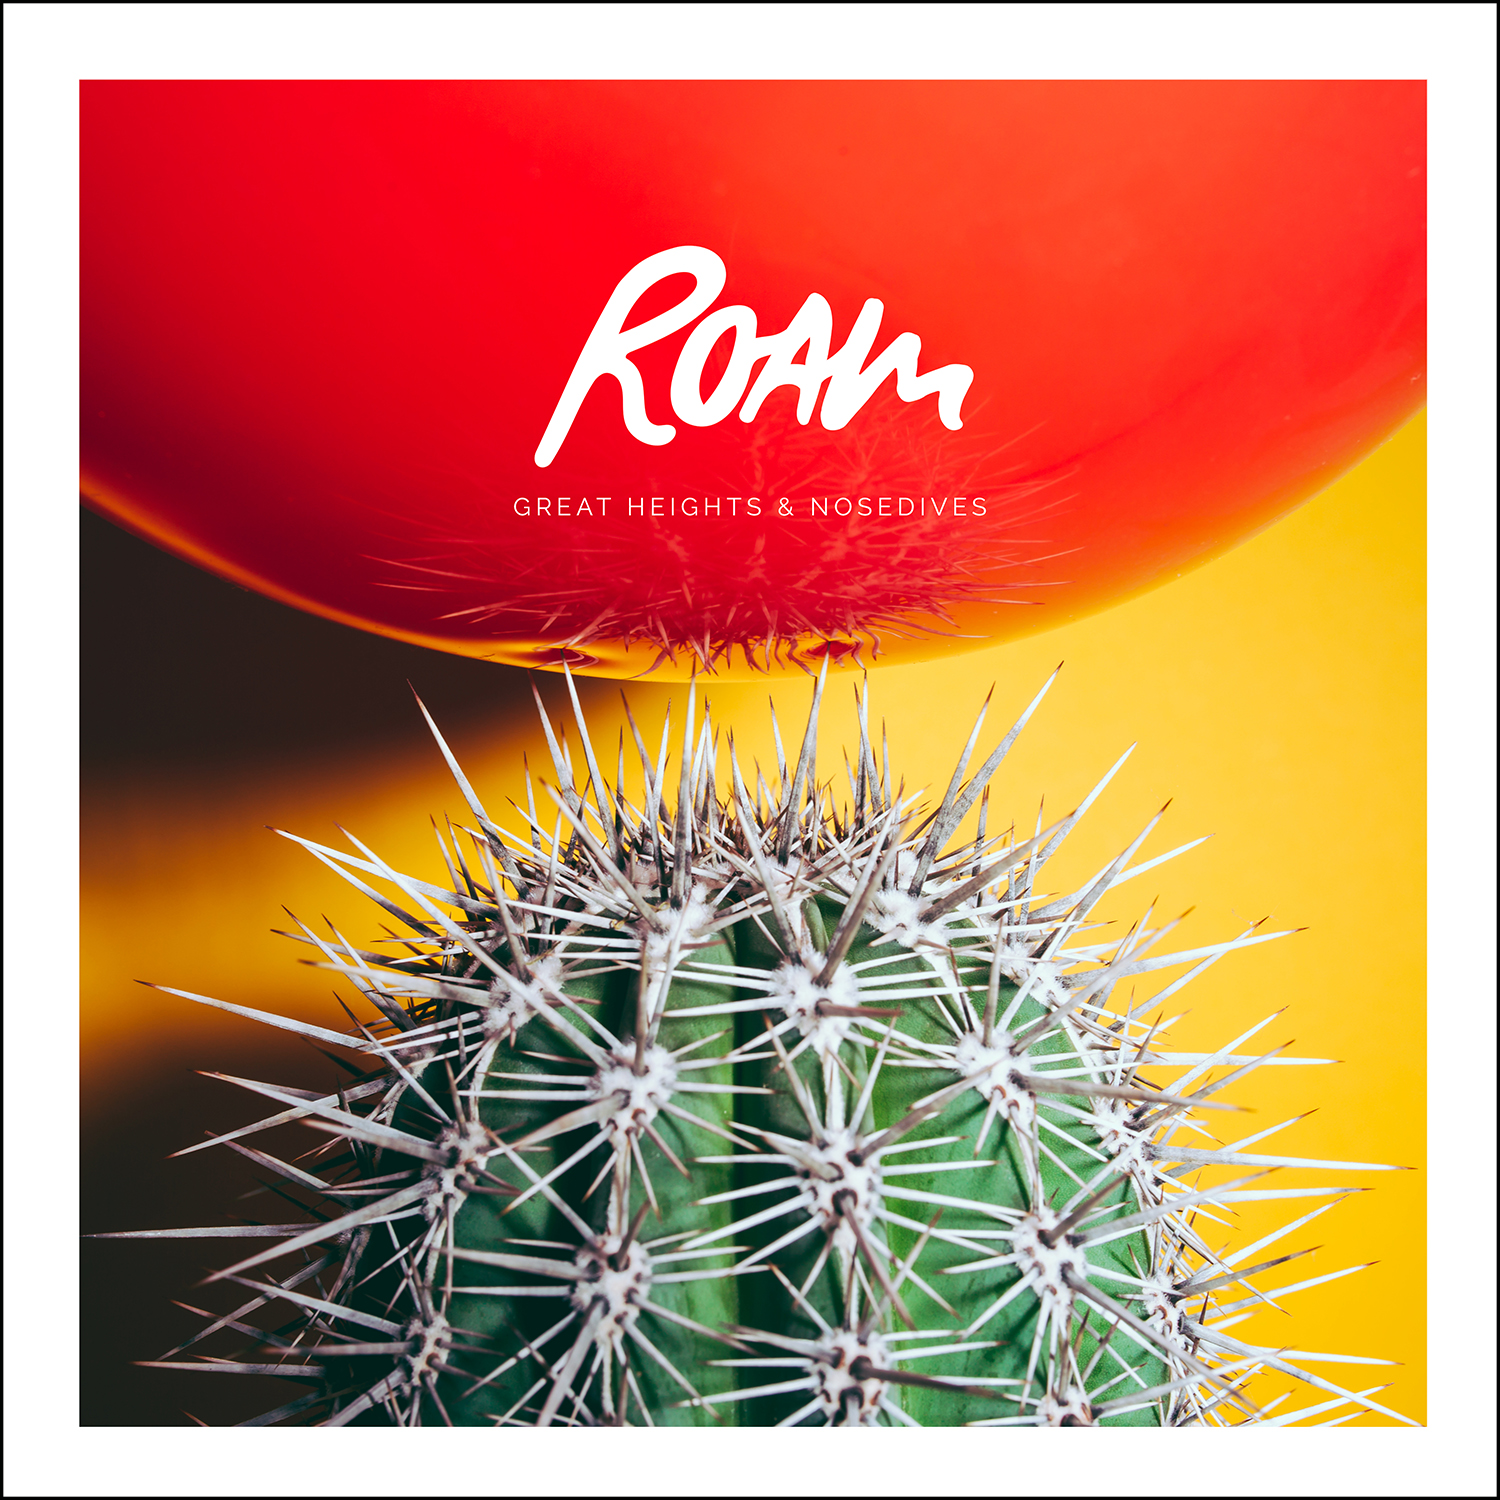 ROAM - Great Heights & Nosedives